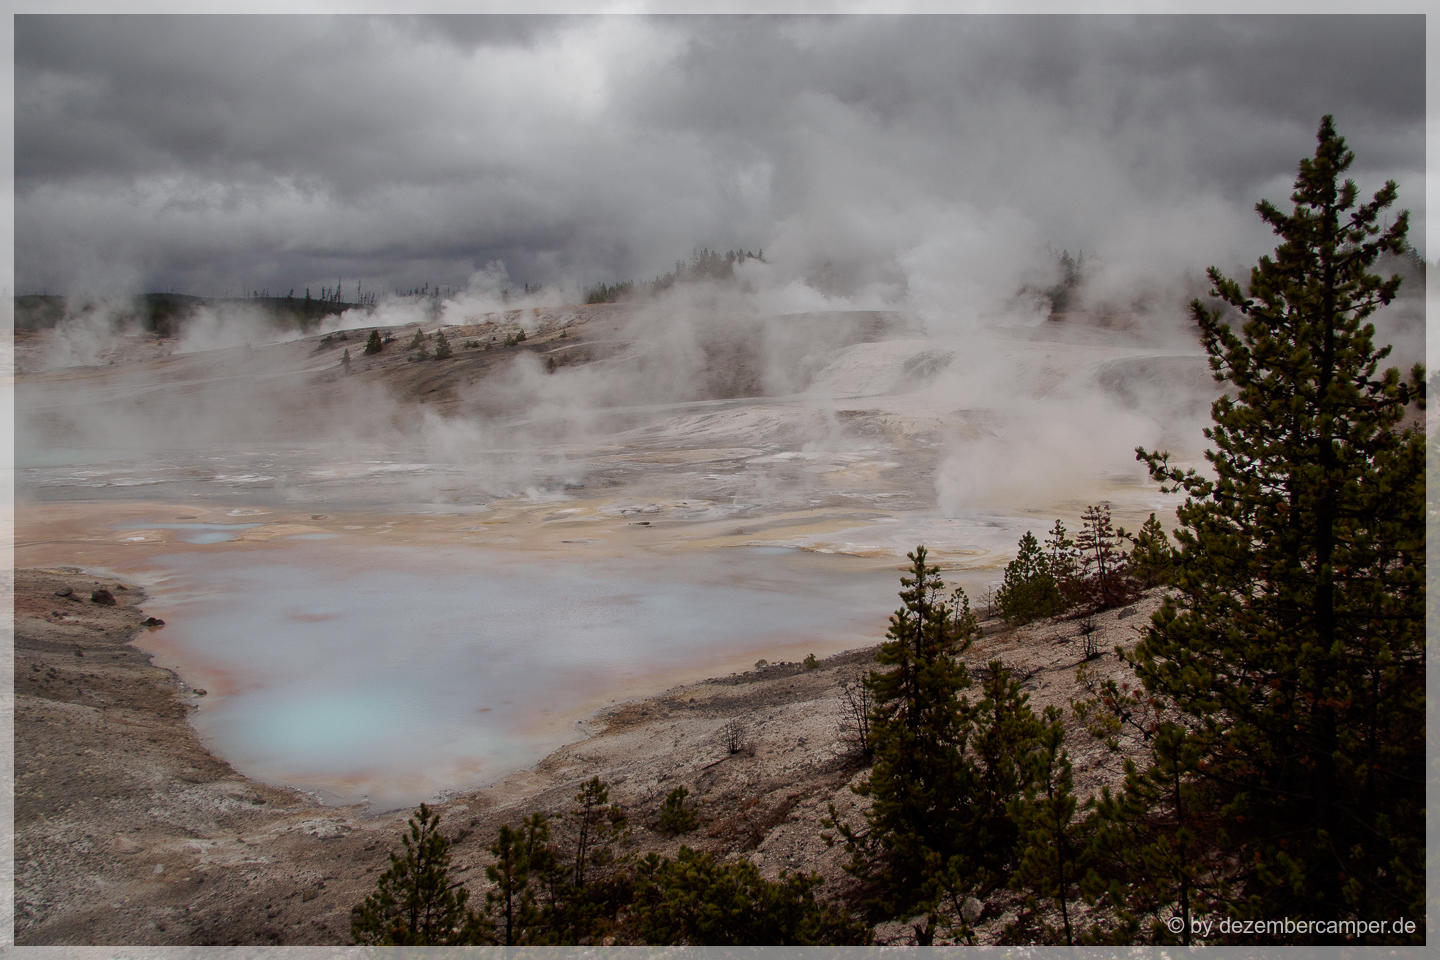 Yellowstone NP - Norris Geysir Basin